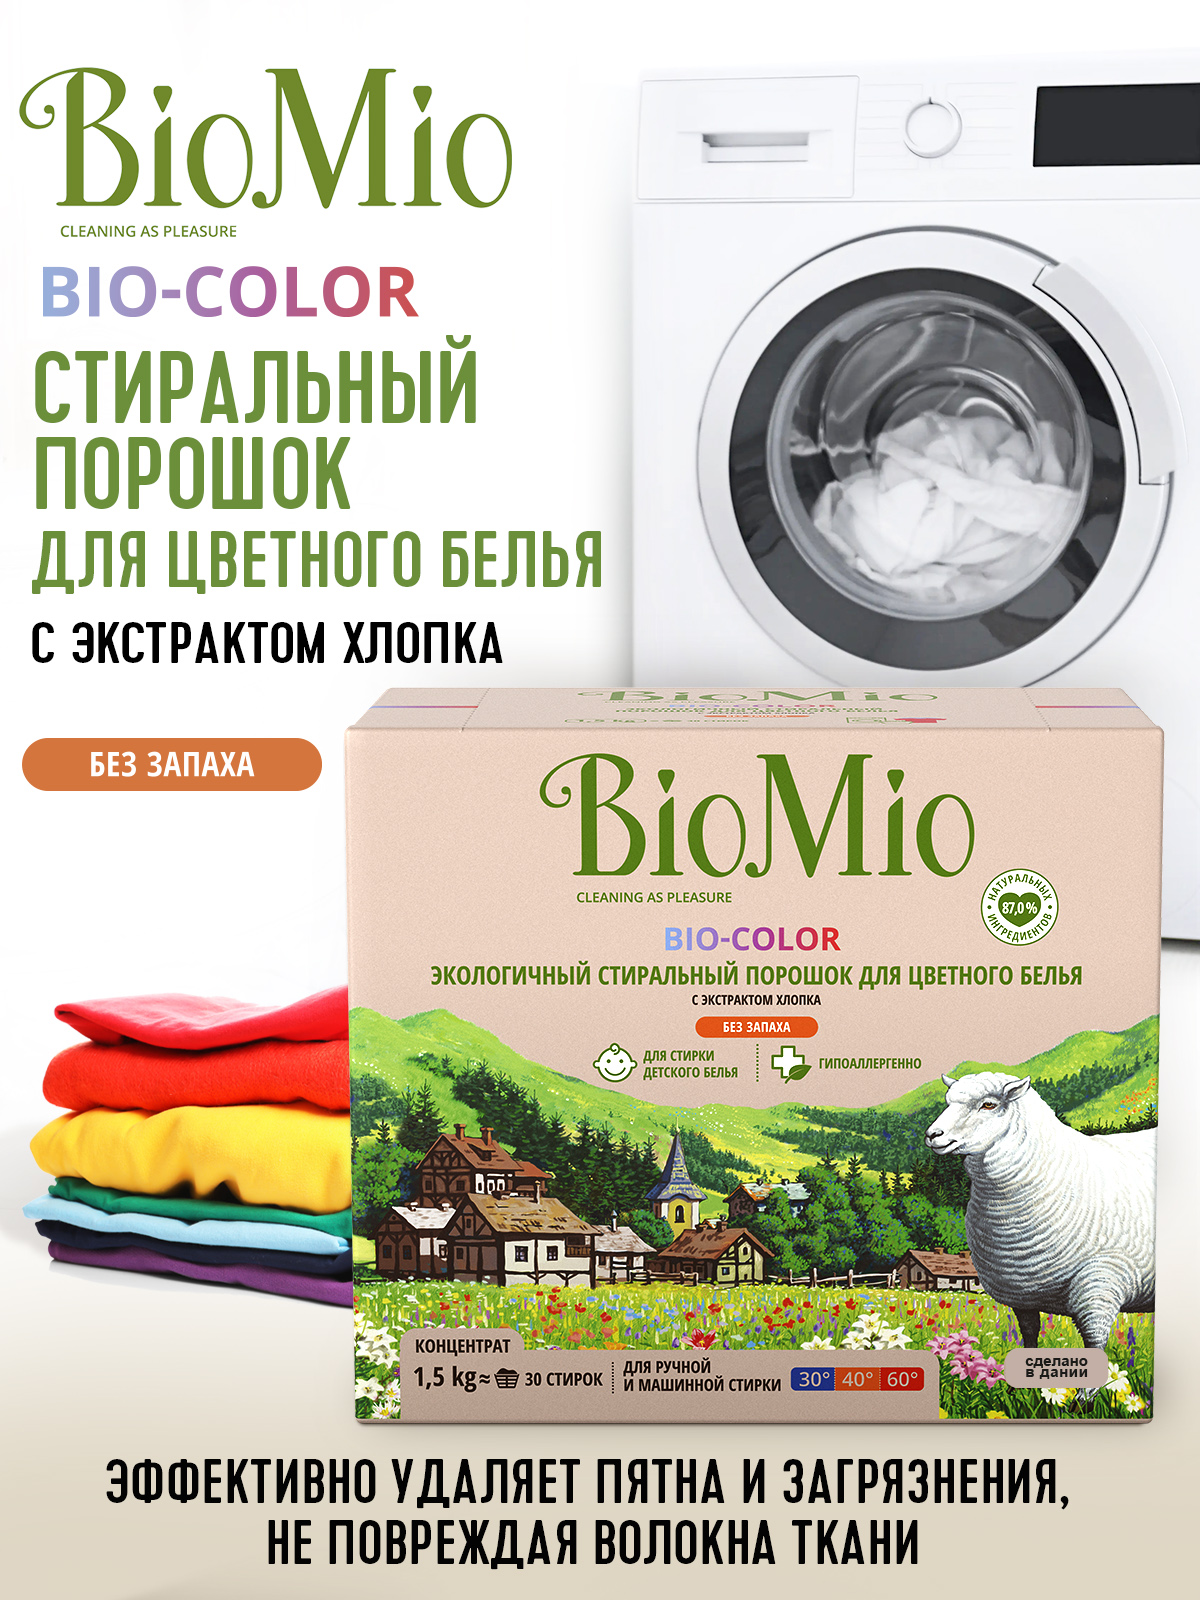 Пральний порошок для кольорової білизни BioMio Bio-Color, концентрат, 1,5 кг - фото 4